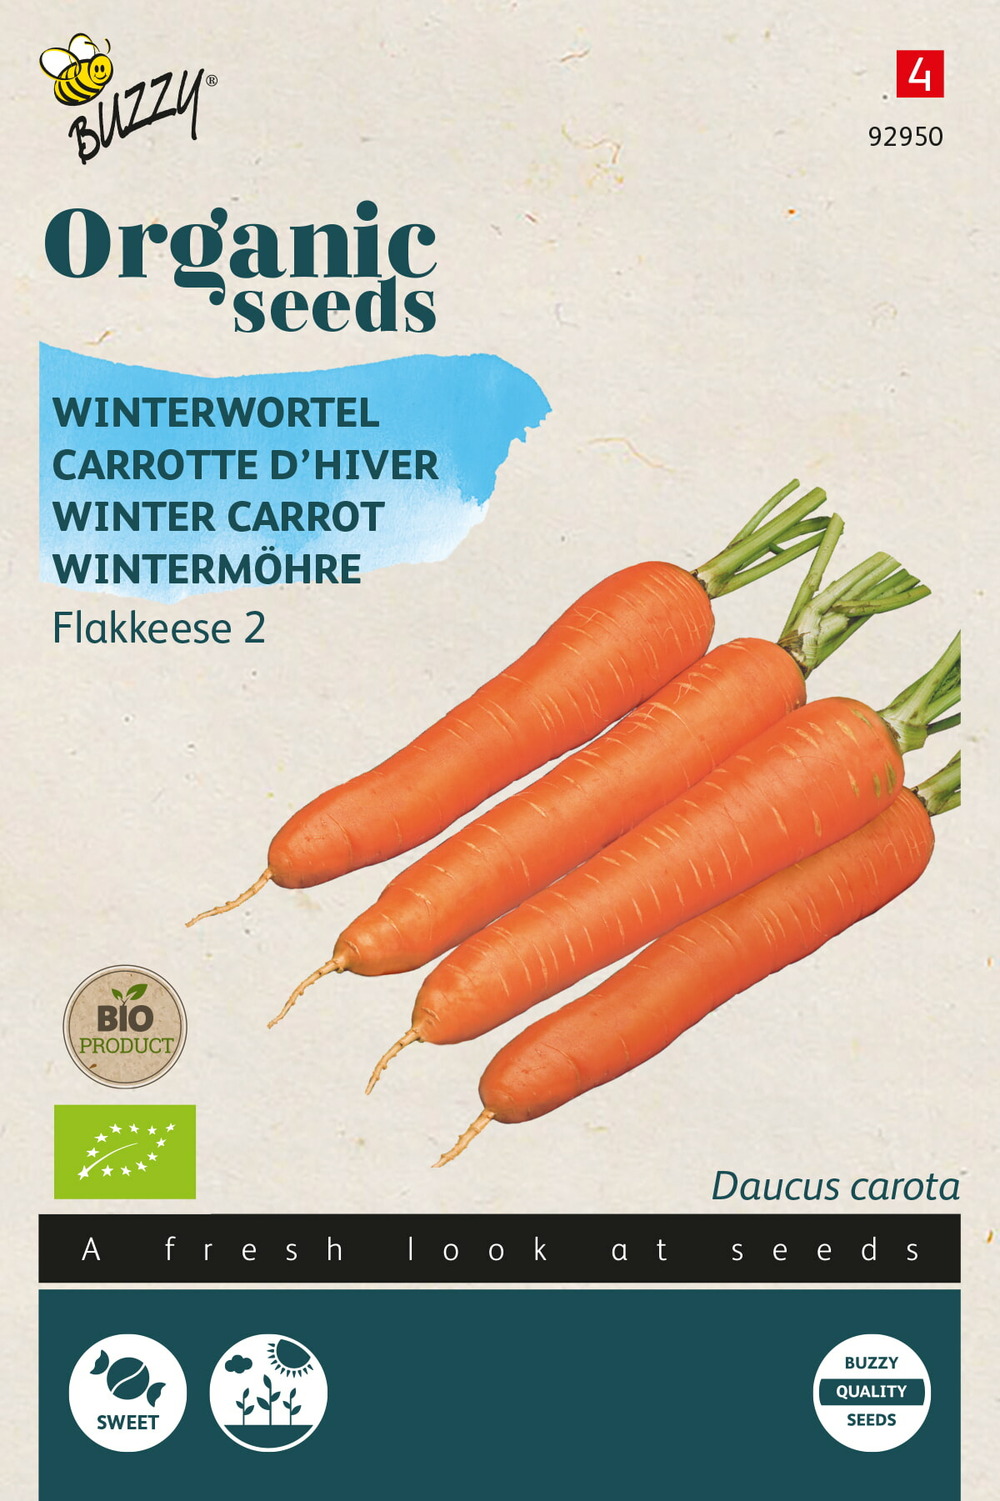 Buzzy organic carotte d'hiver flakkée 2 (bio) - ca. 1,5 gram